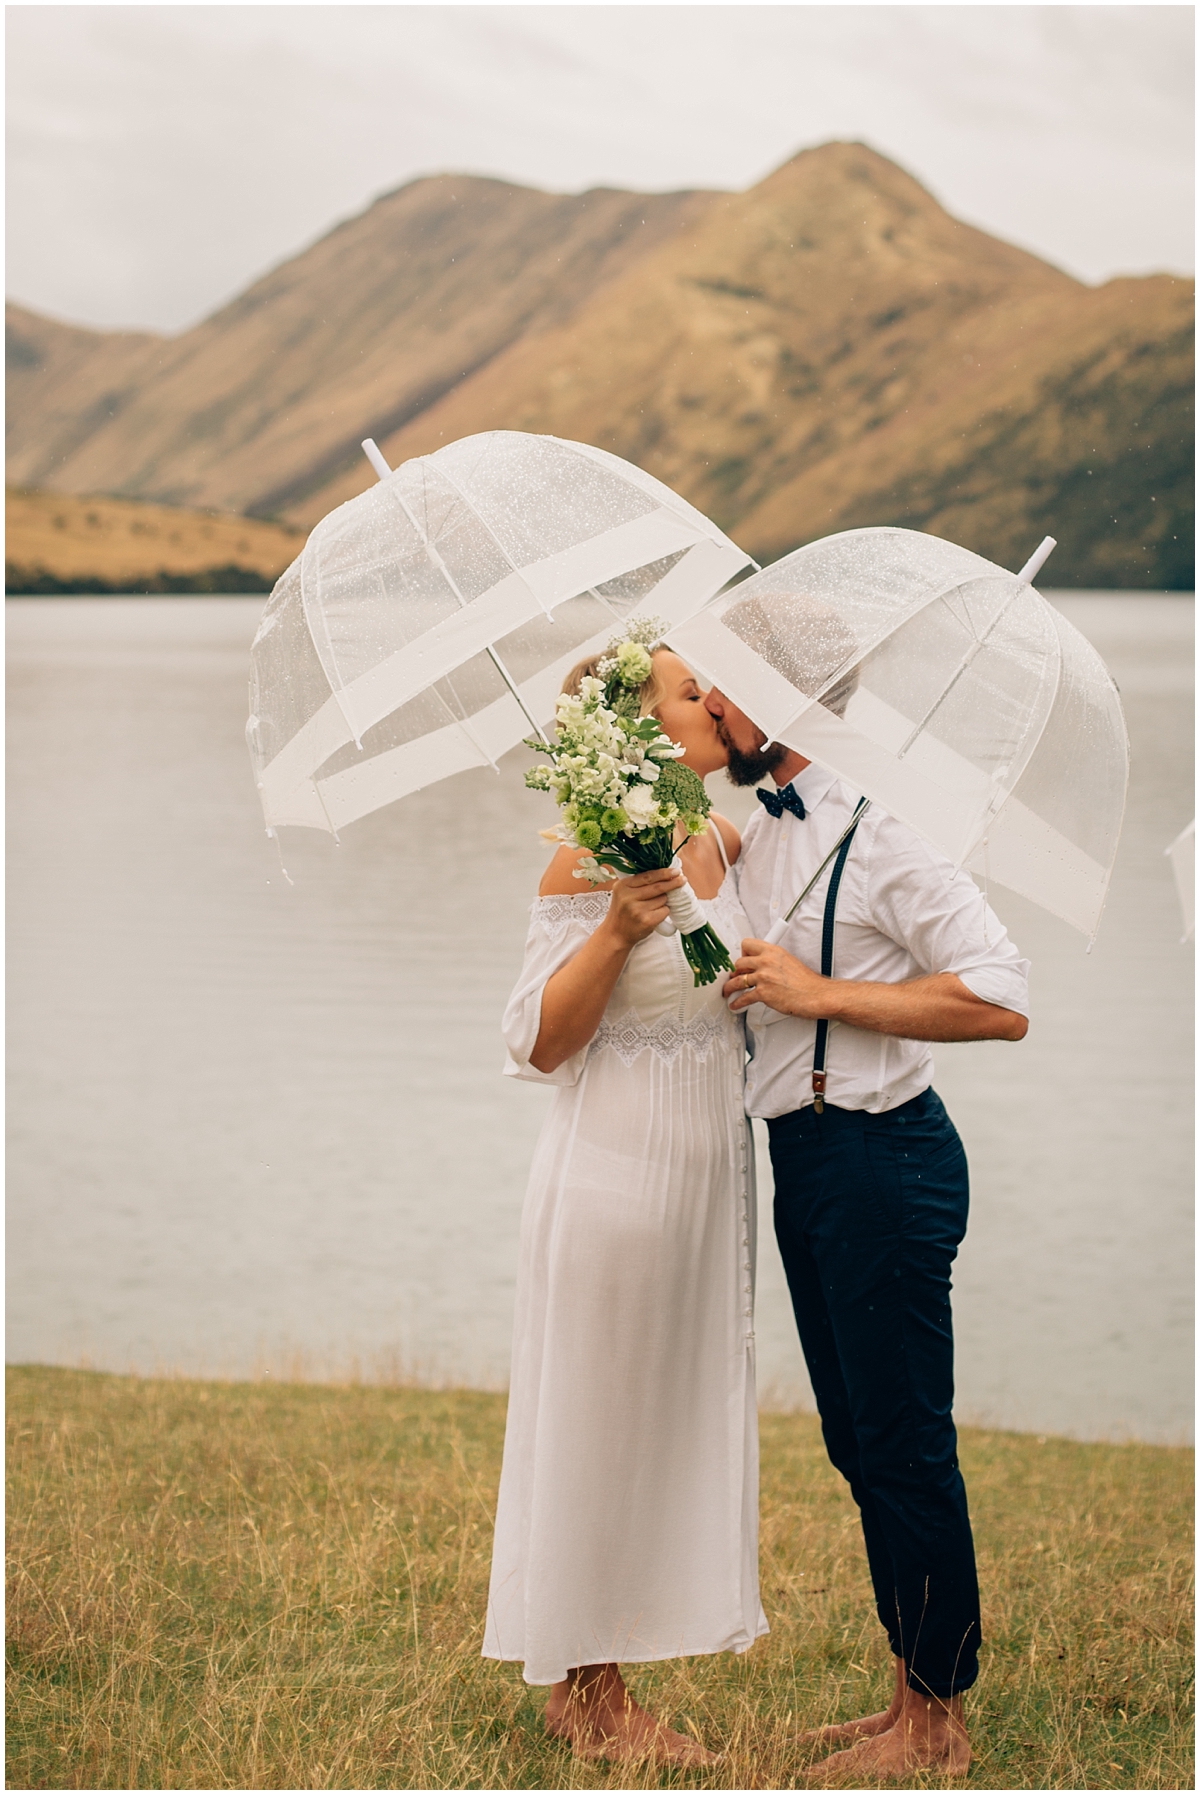 Couple kiss under umbrellas at Queenstown elopement